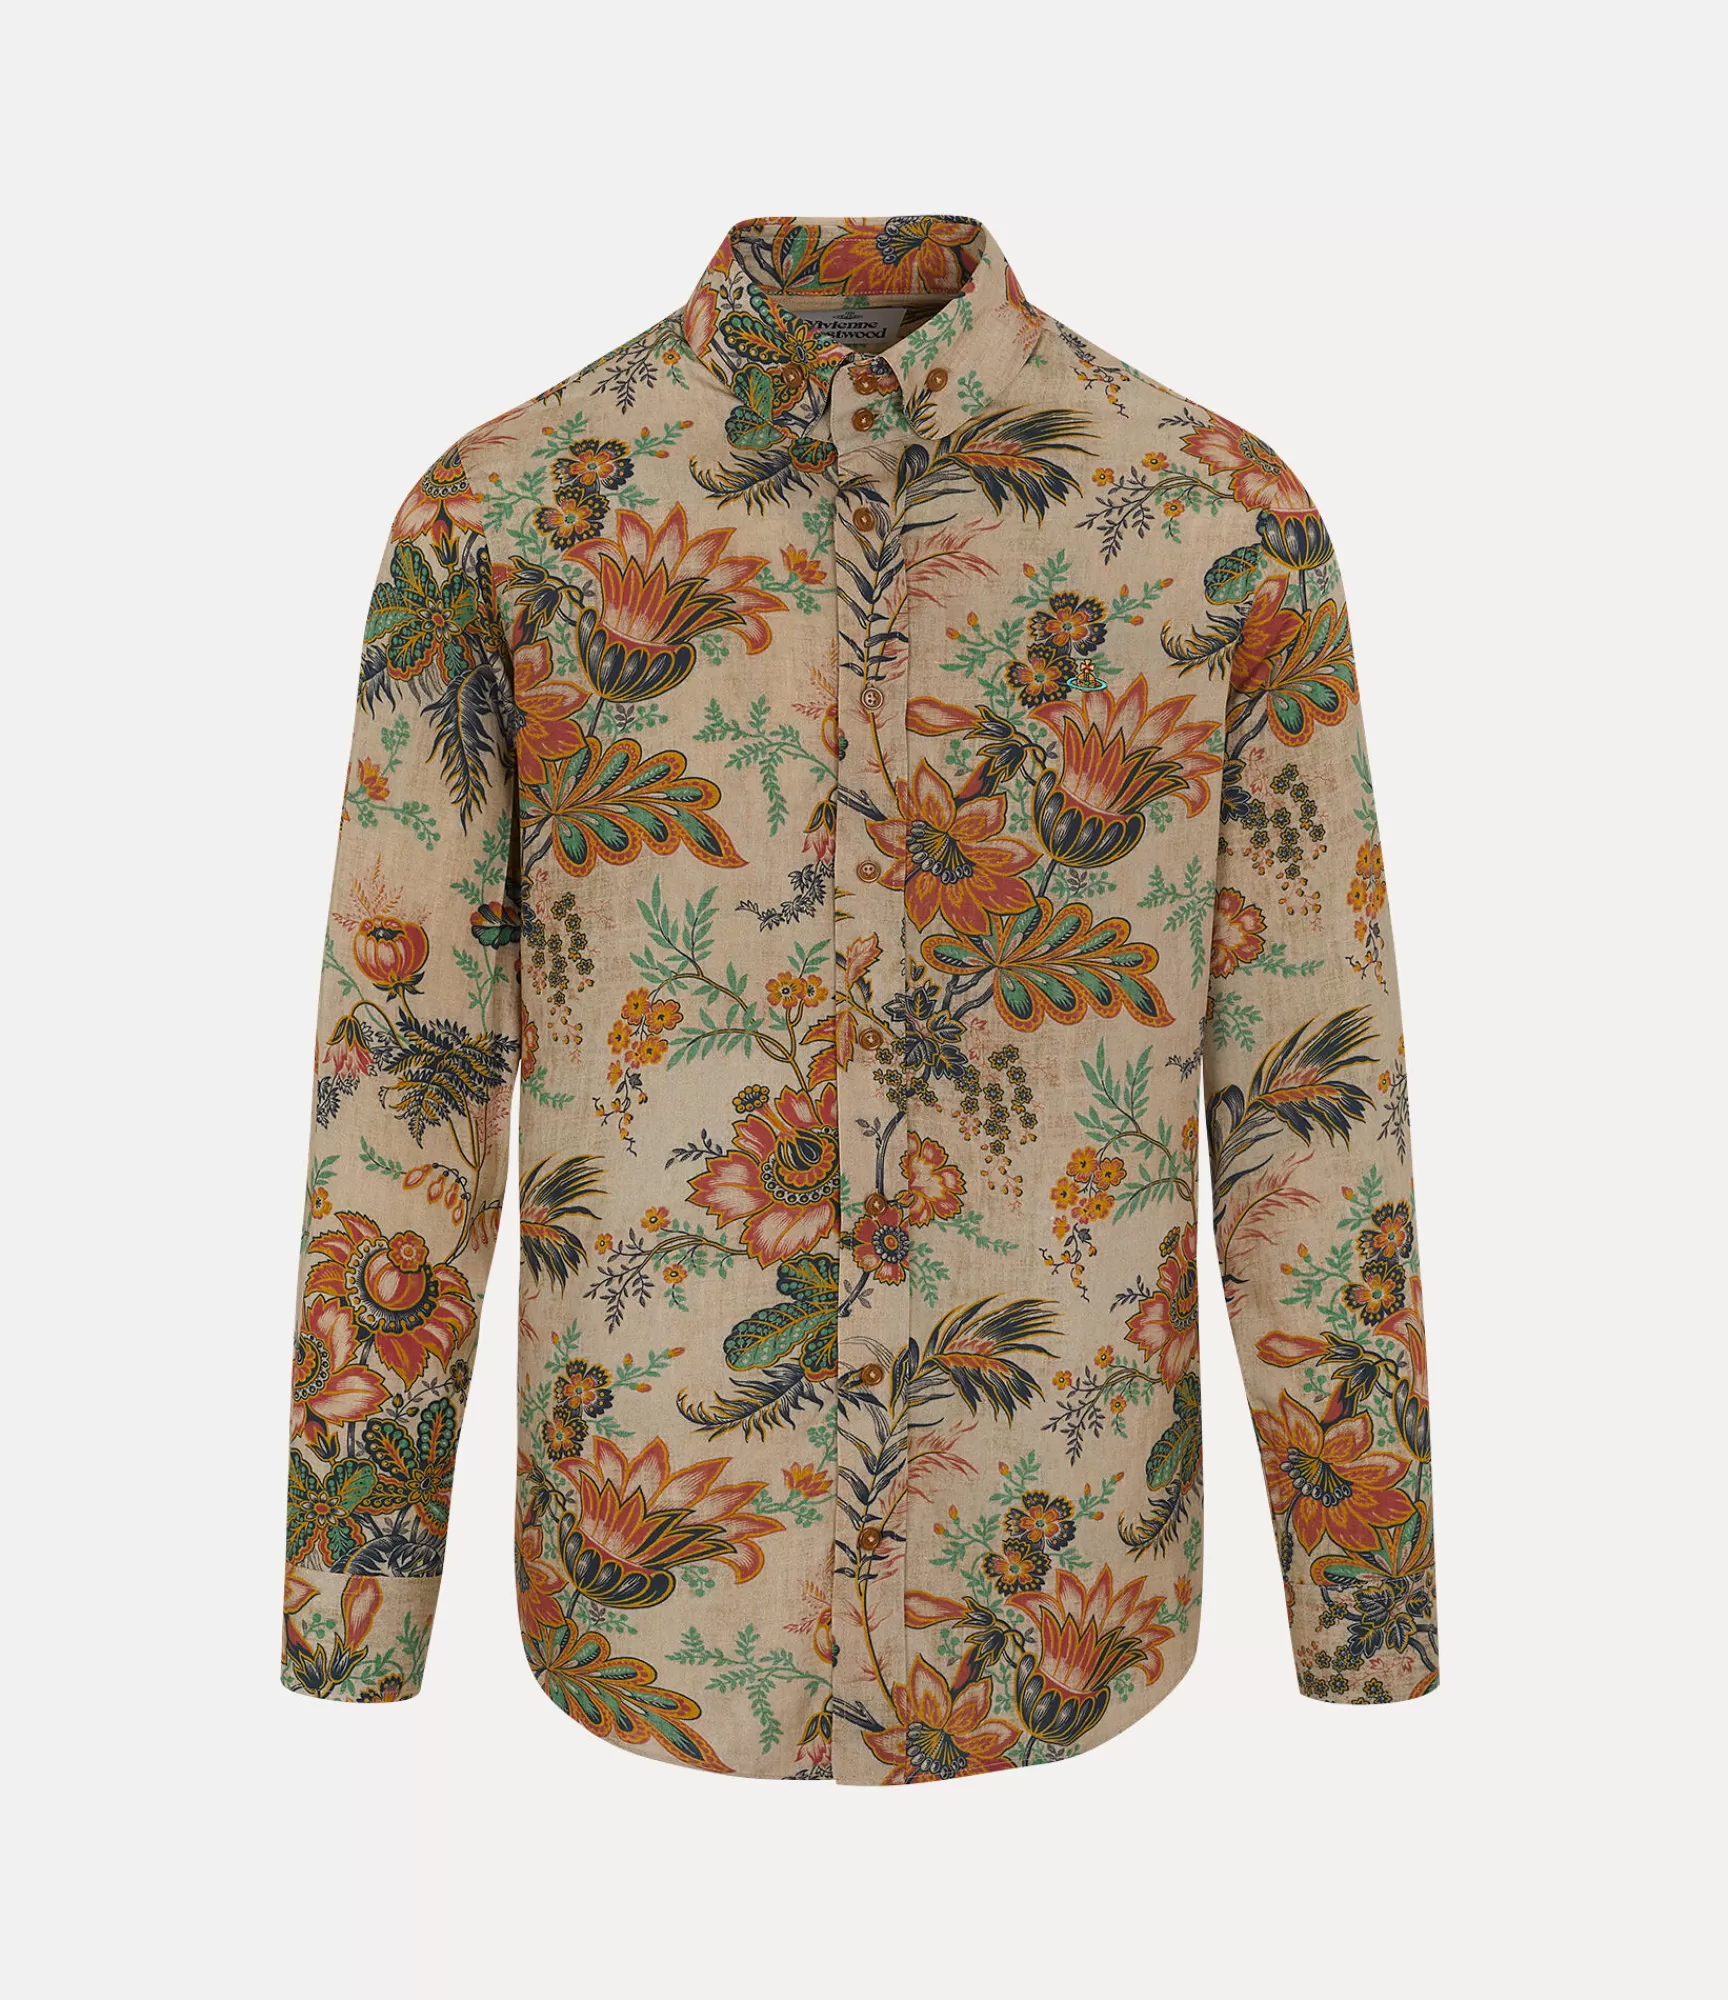 Vivienne Westwood Shirts*2 button krall Multi